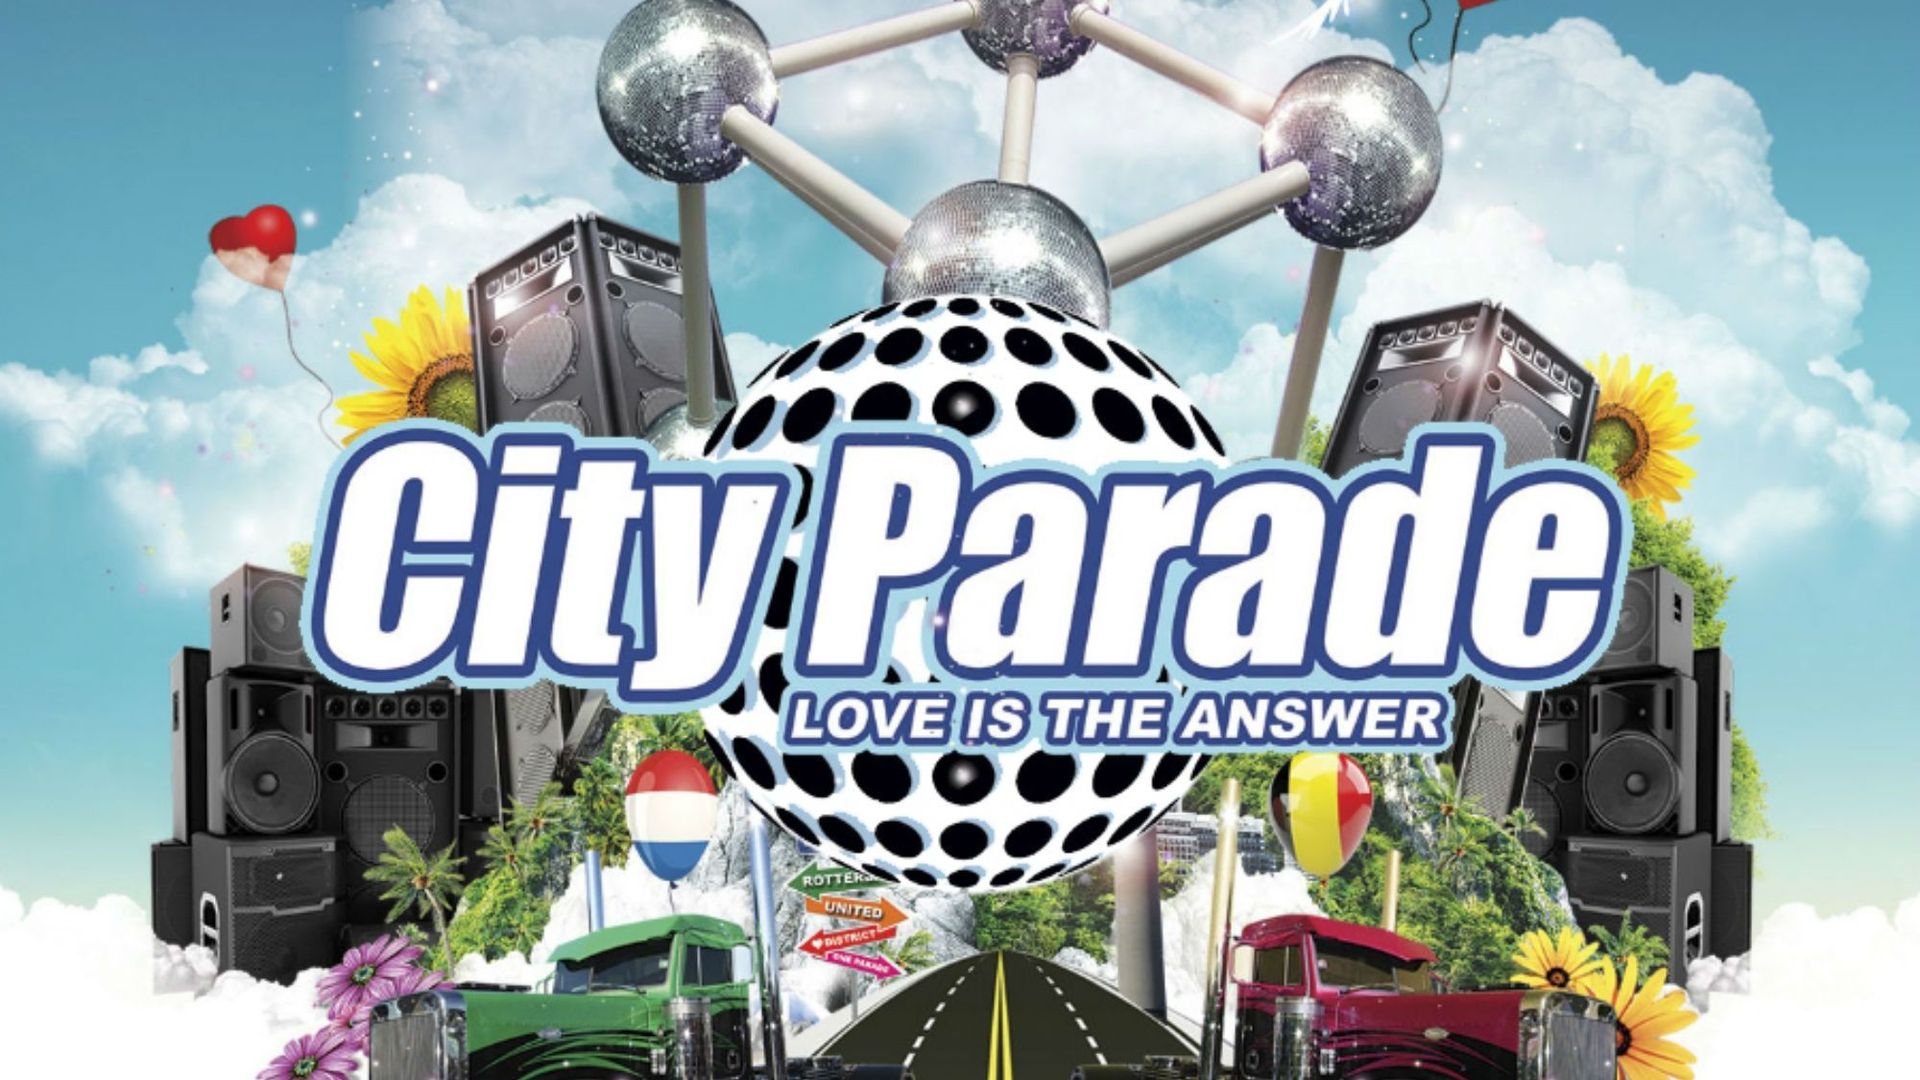 La 16e édition de la City Parade se tiendra ce samedi au Heysel